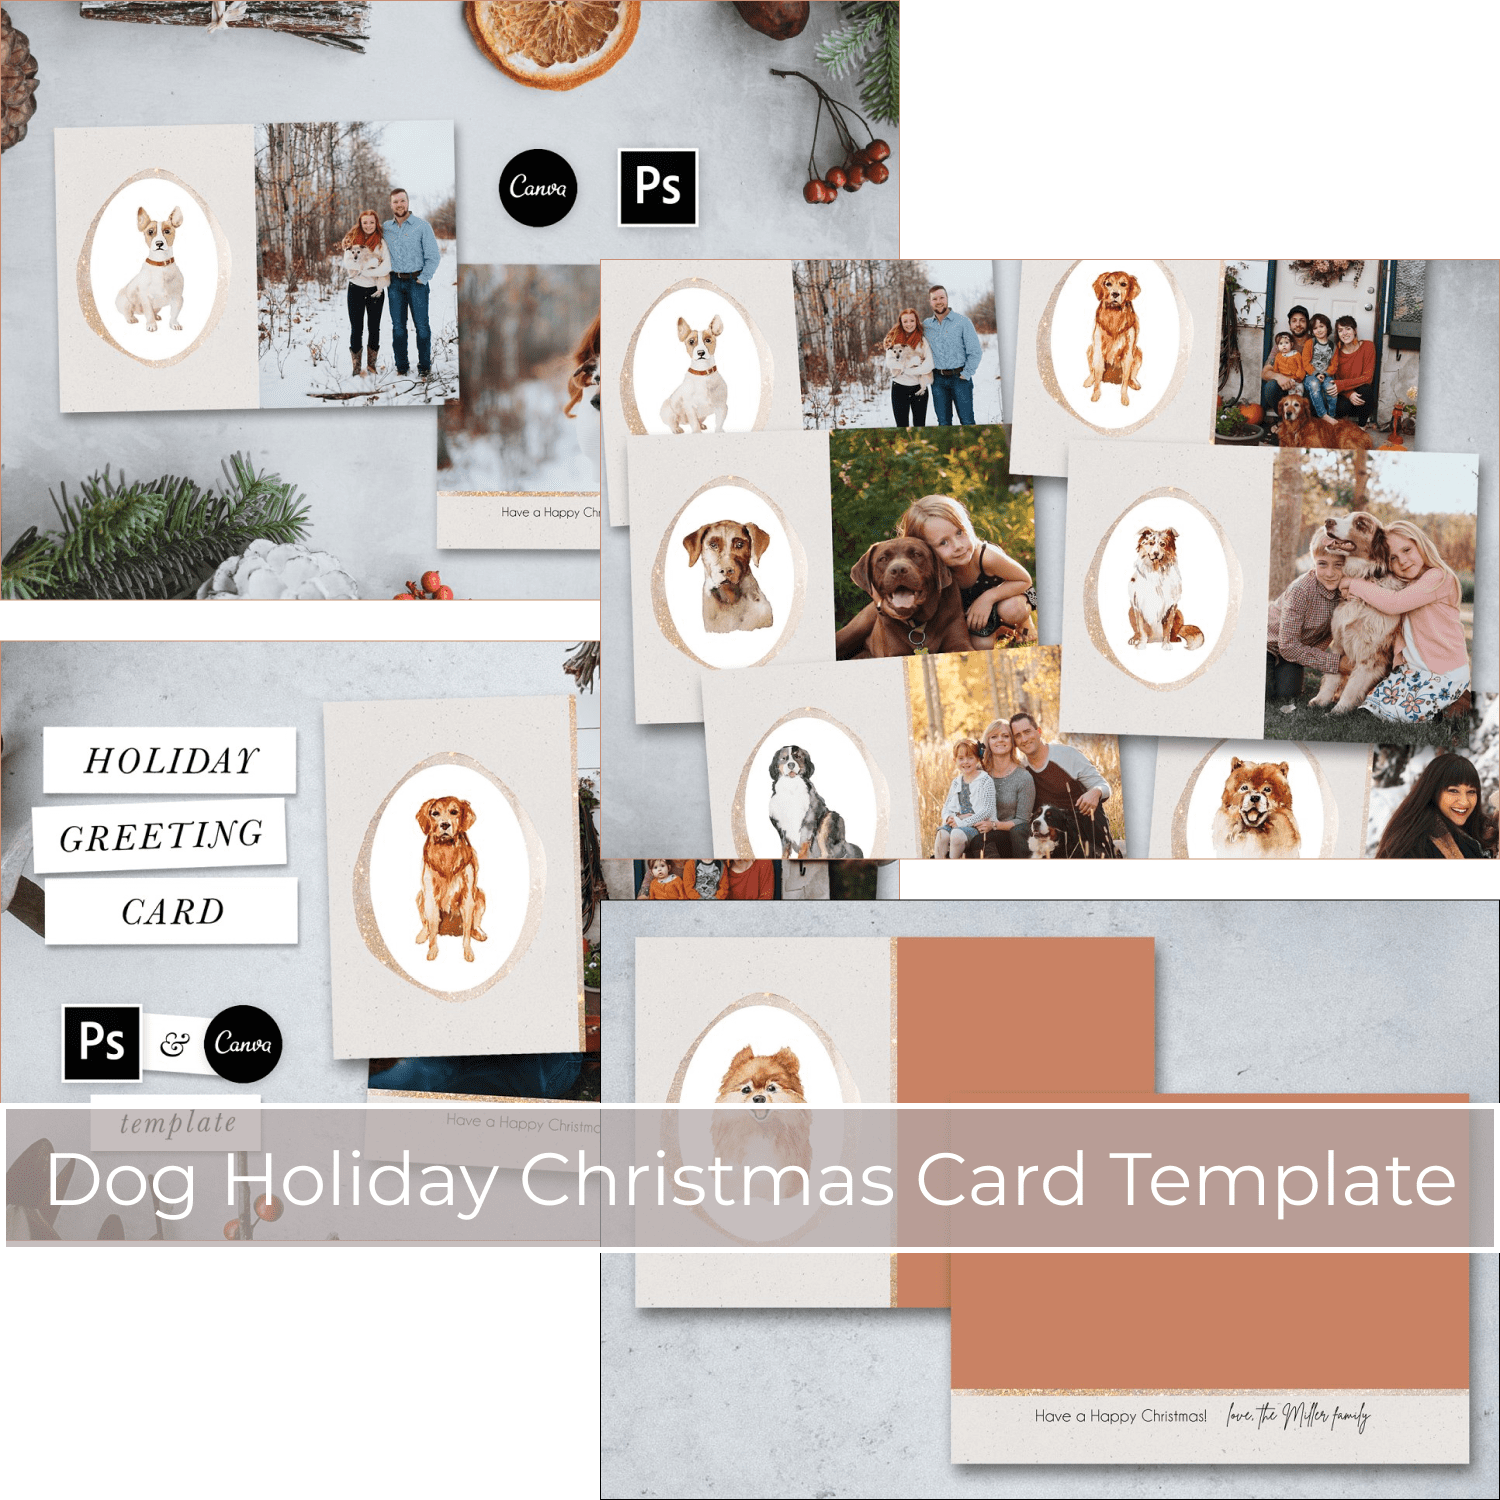 Dog Holiday Christmas Card Template cover image.